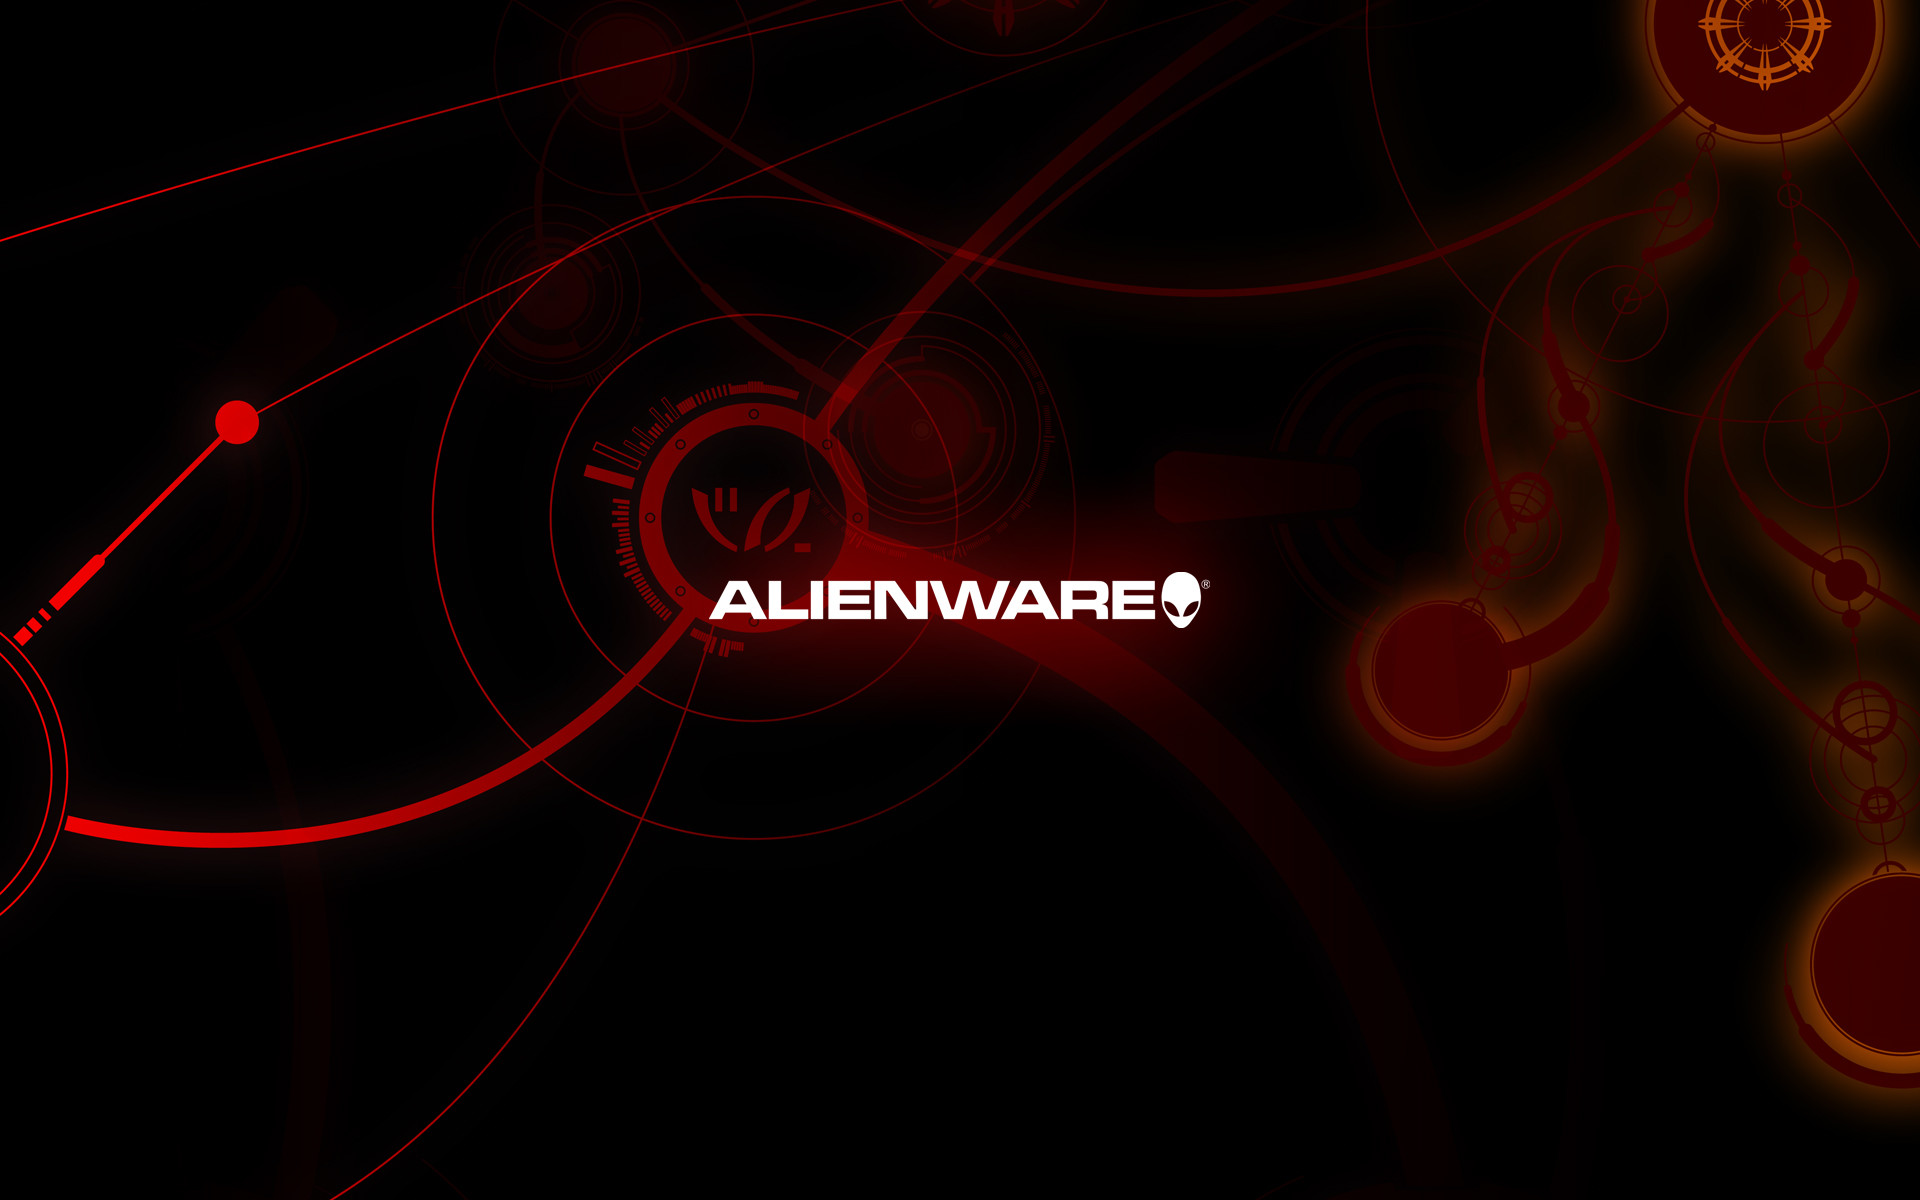 1920x1200 HD Alienware Wallpapers 1920Ã1080 & Alienware Backgrounds for Laptops .